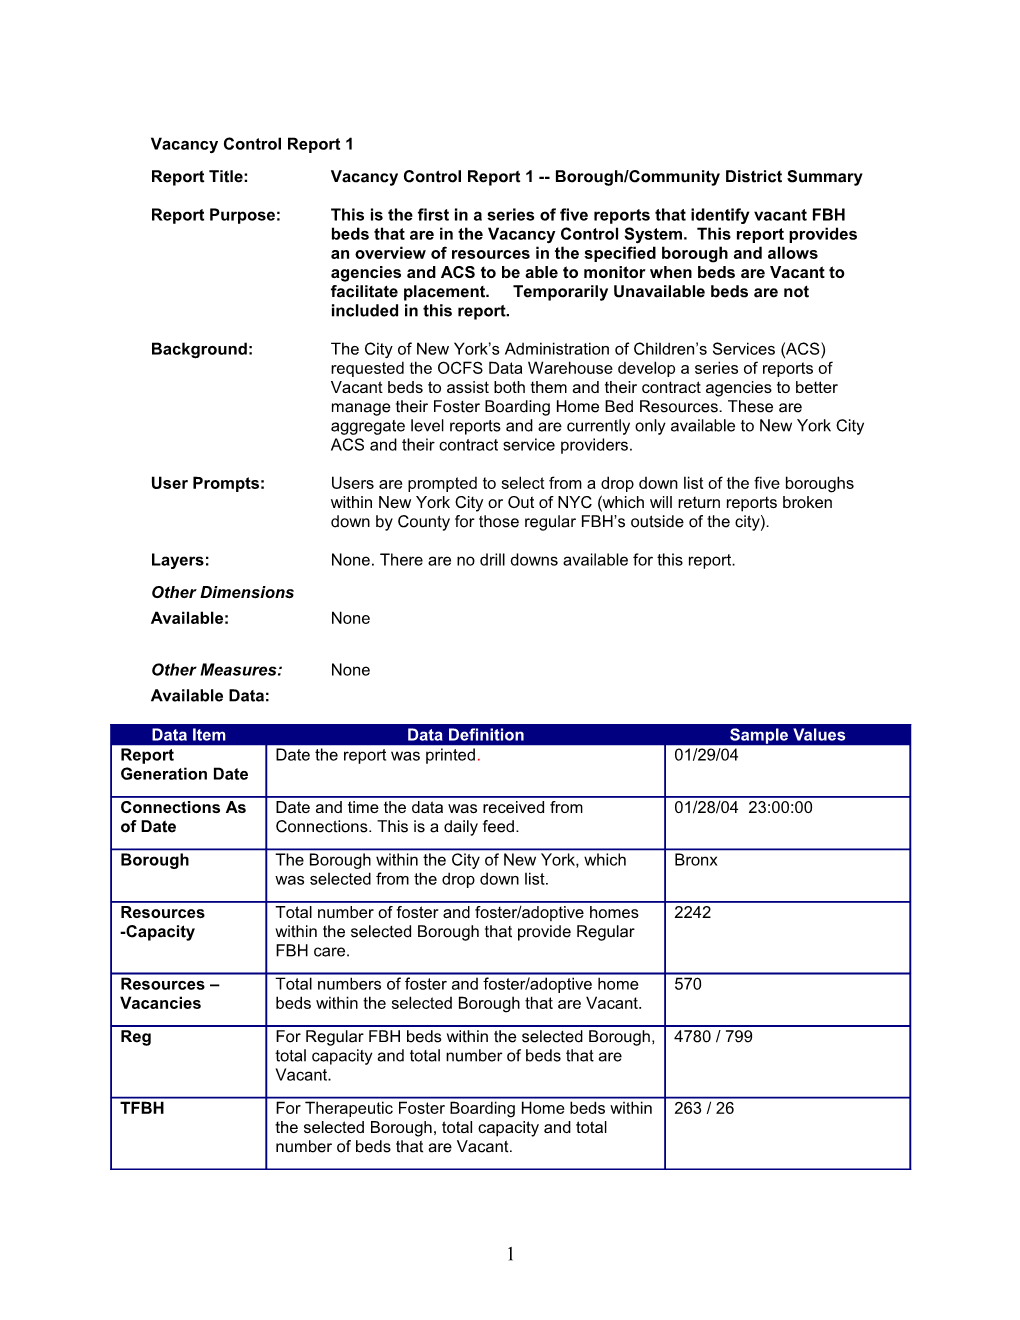 Report Title:Vacancy Control Report 1 Borough/Community District Summary